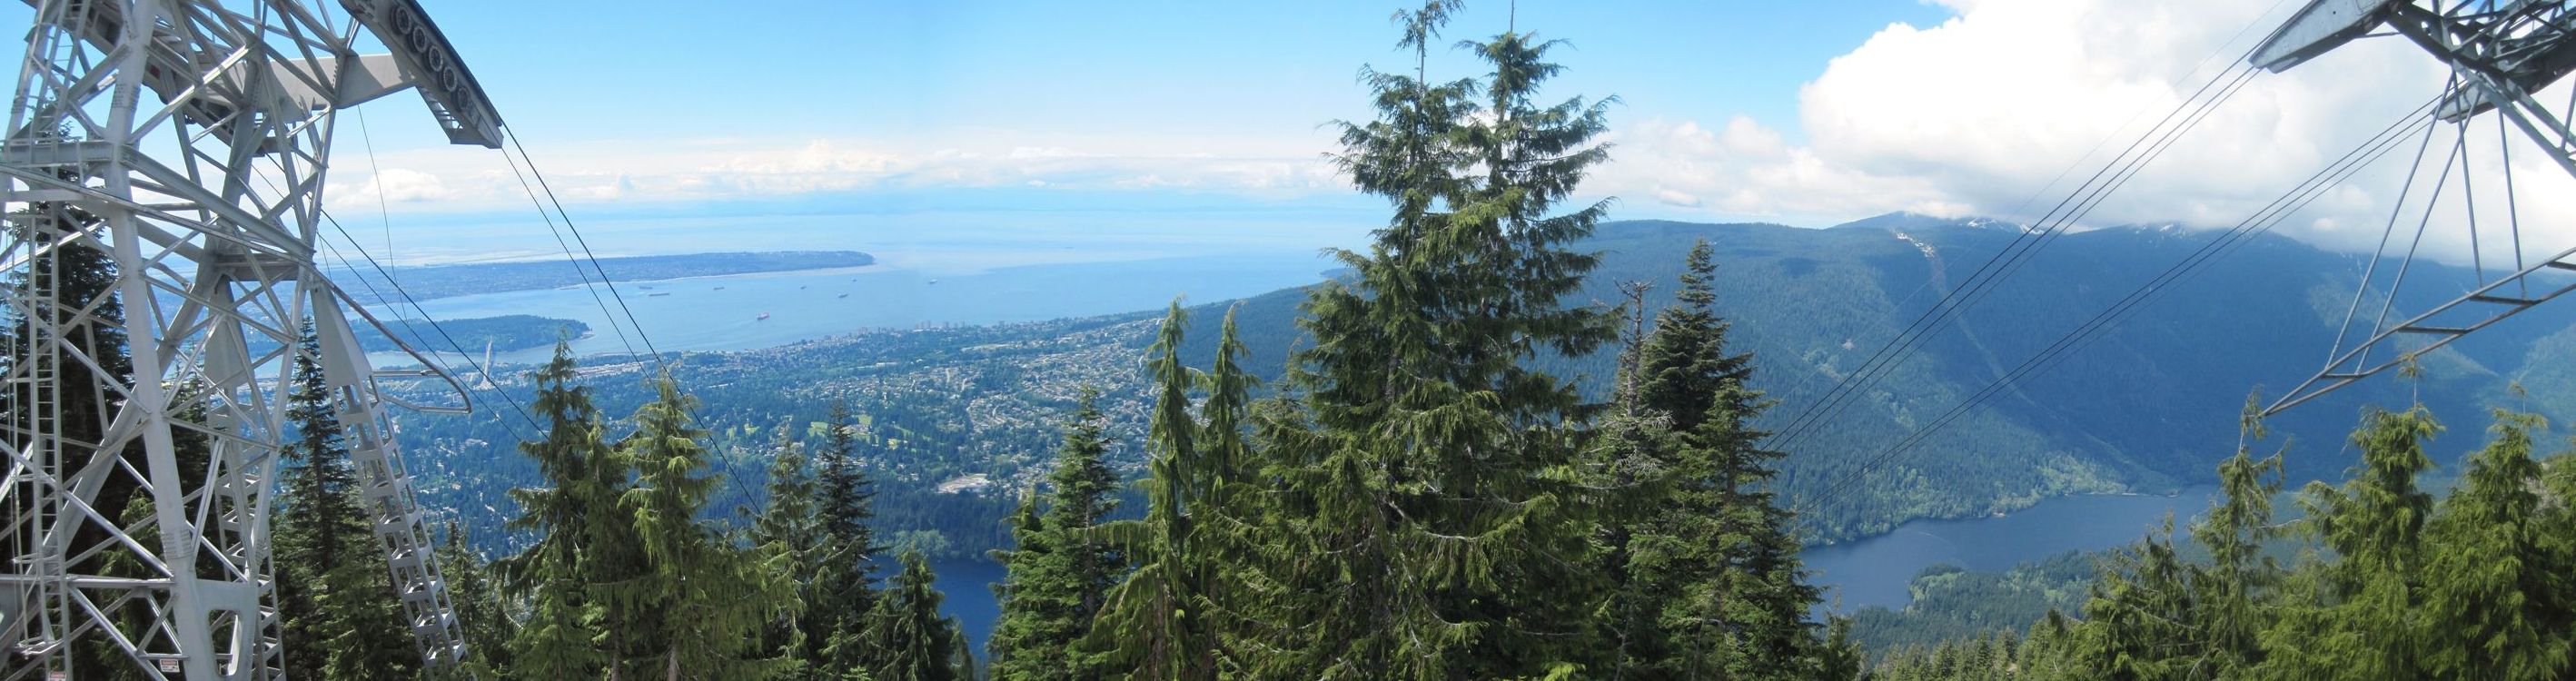 Der Blick vom Peak Chalet des Grouse Mountain auf Vancouver.